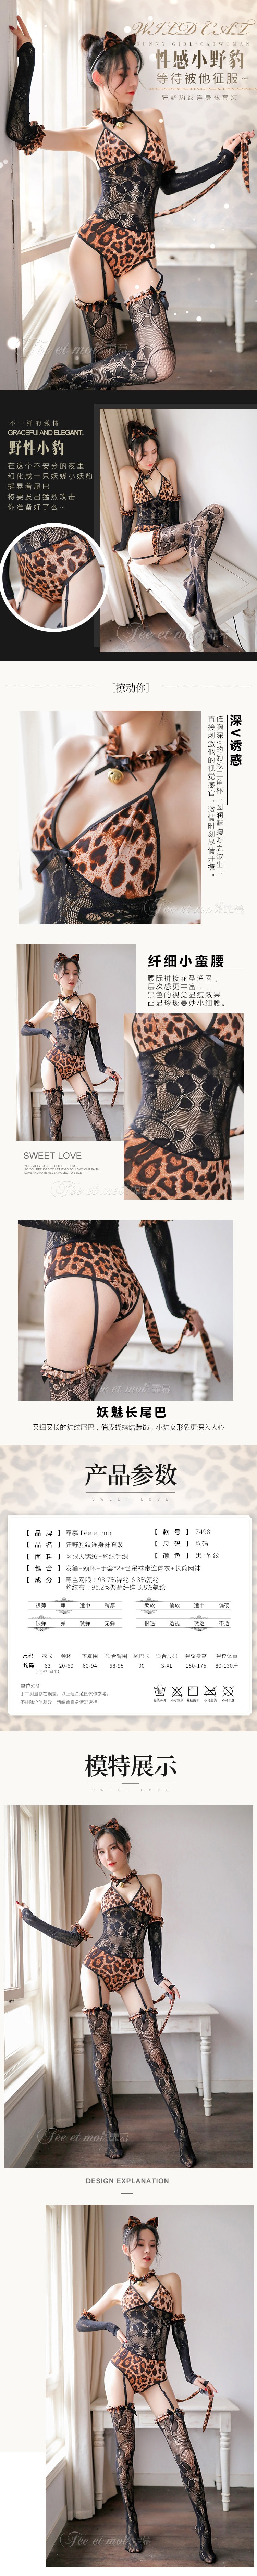 Wild Leopard Print Stocking Set